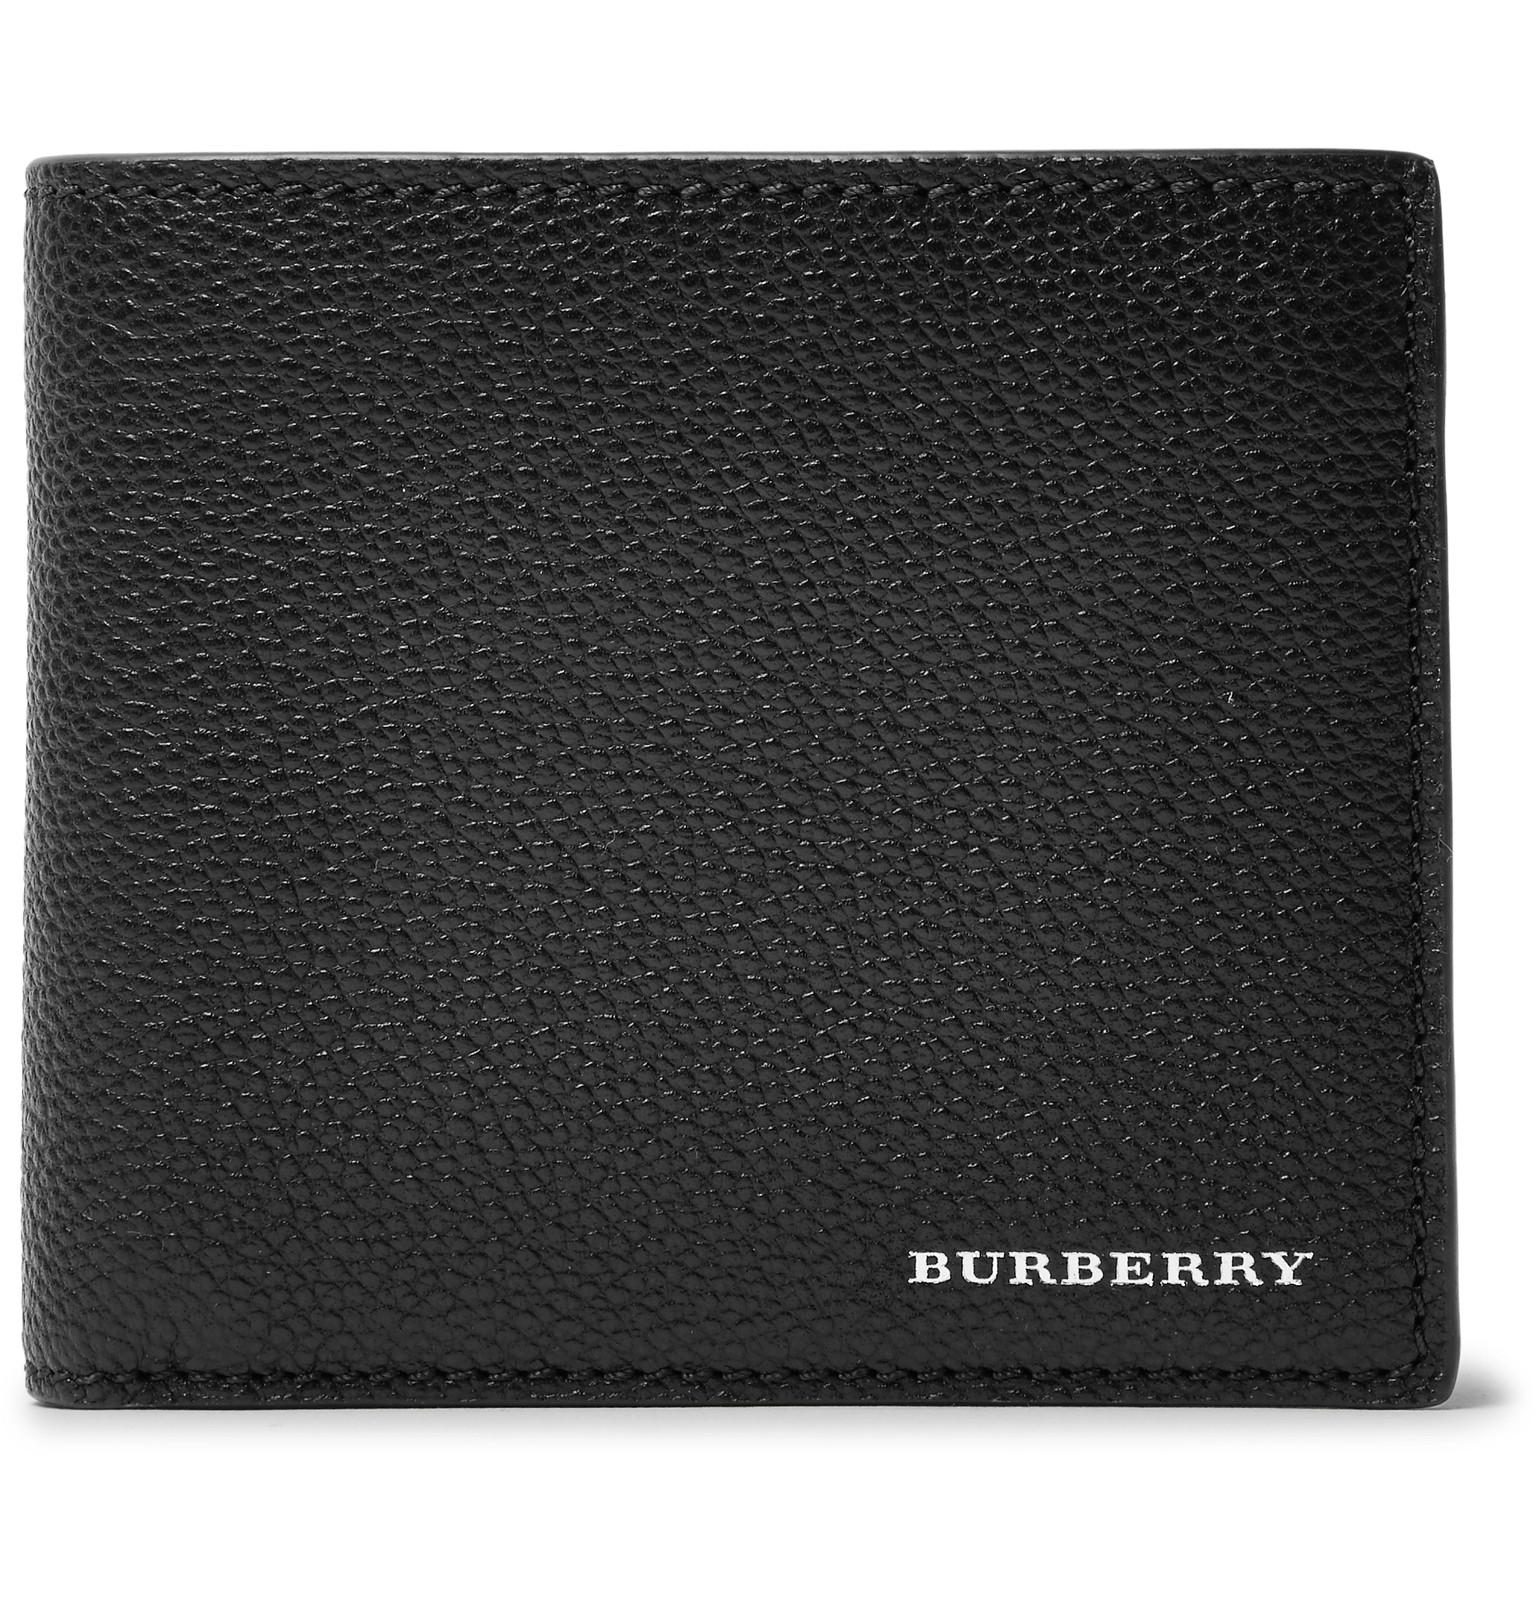 burberry billfold wallet